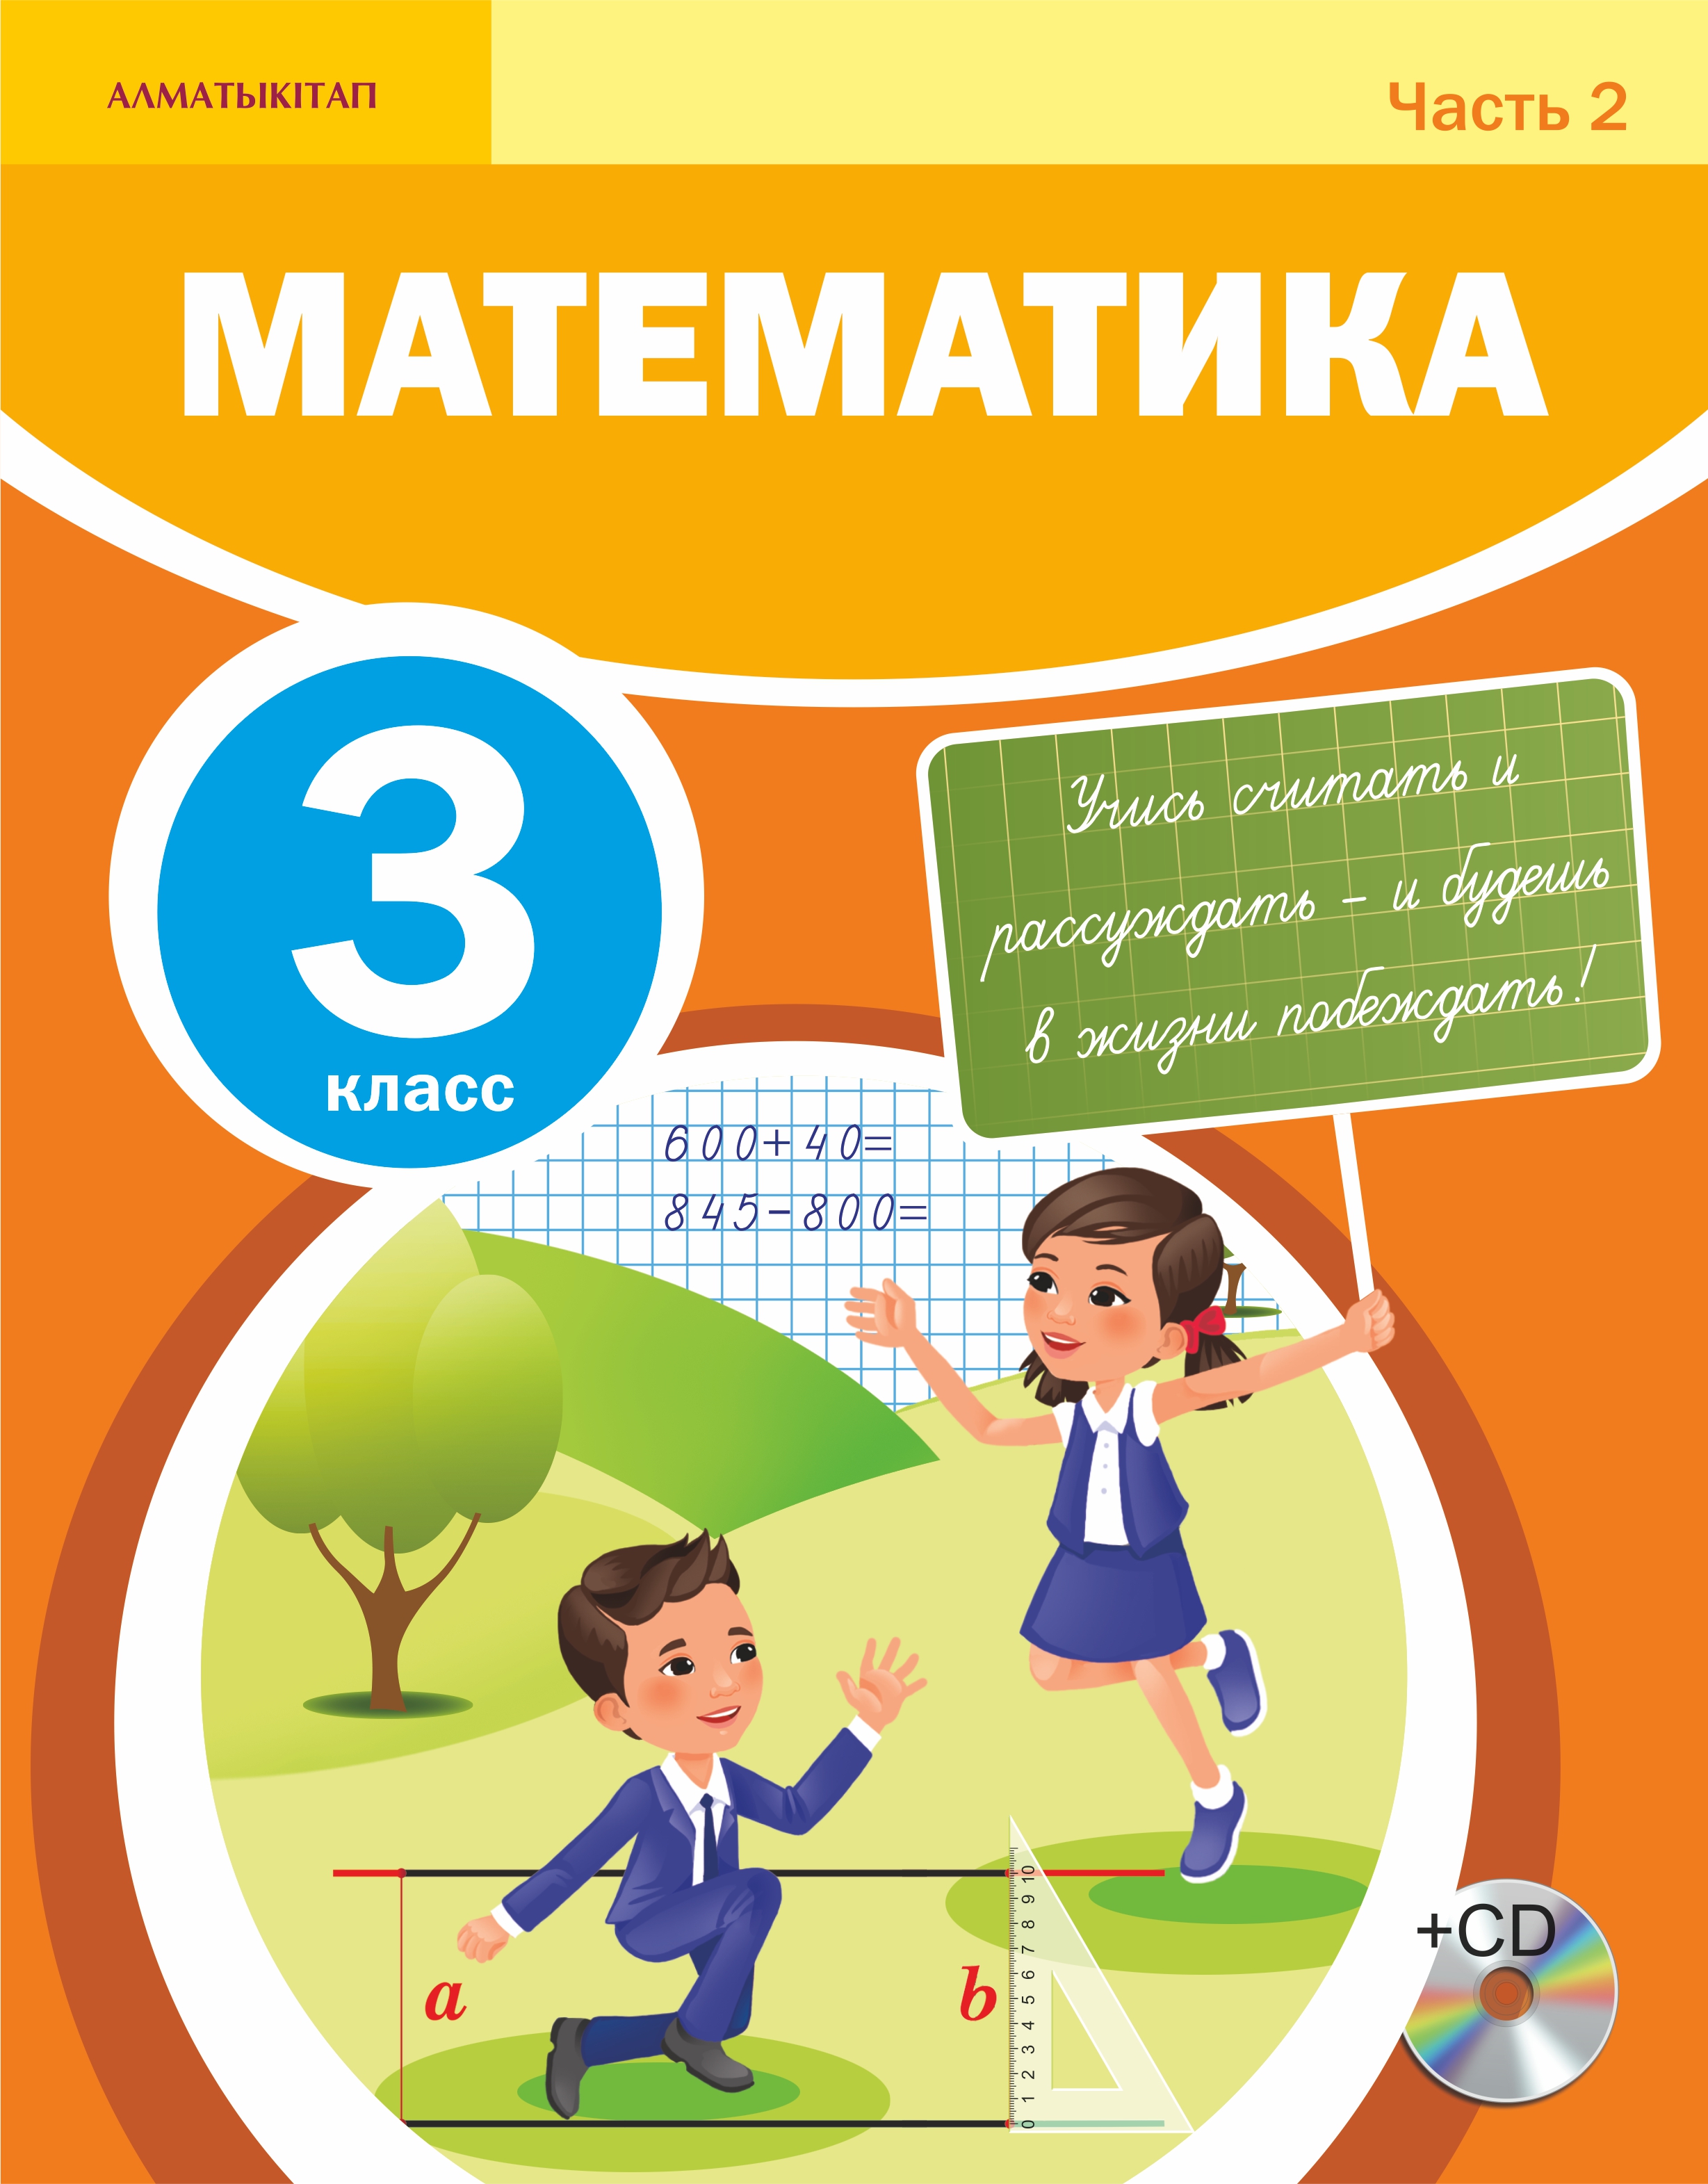 Книга математика. Учебник математики 3 класс Казахстан. Обложка для книги математика. Математика 3 сынып.